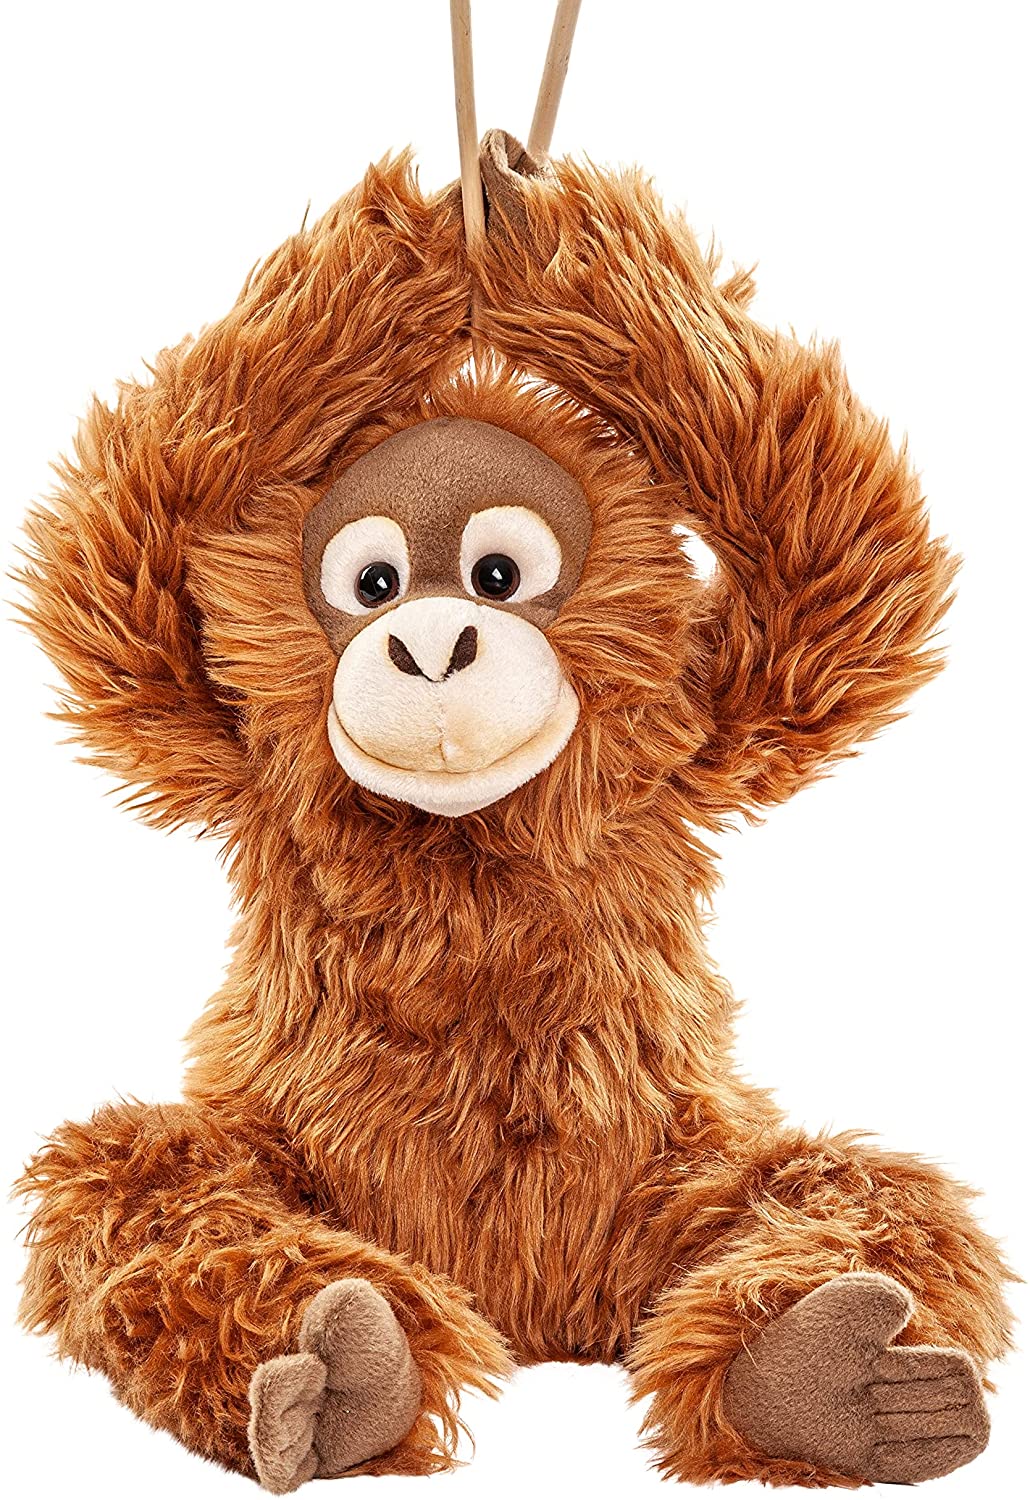 orangutan with Velcro on the hands - 28 cm (height)